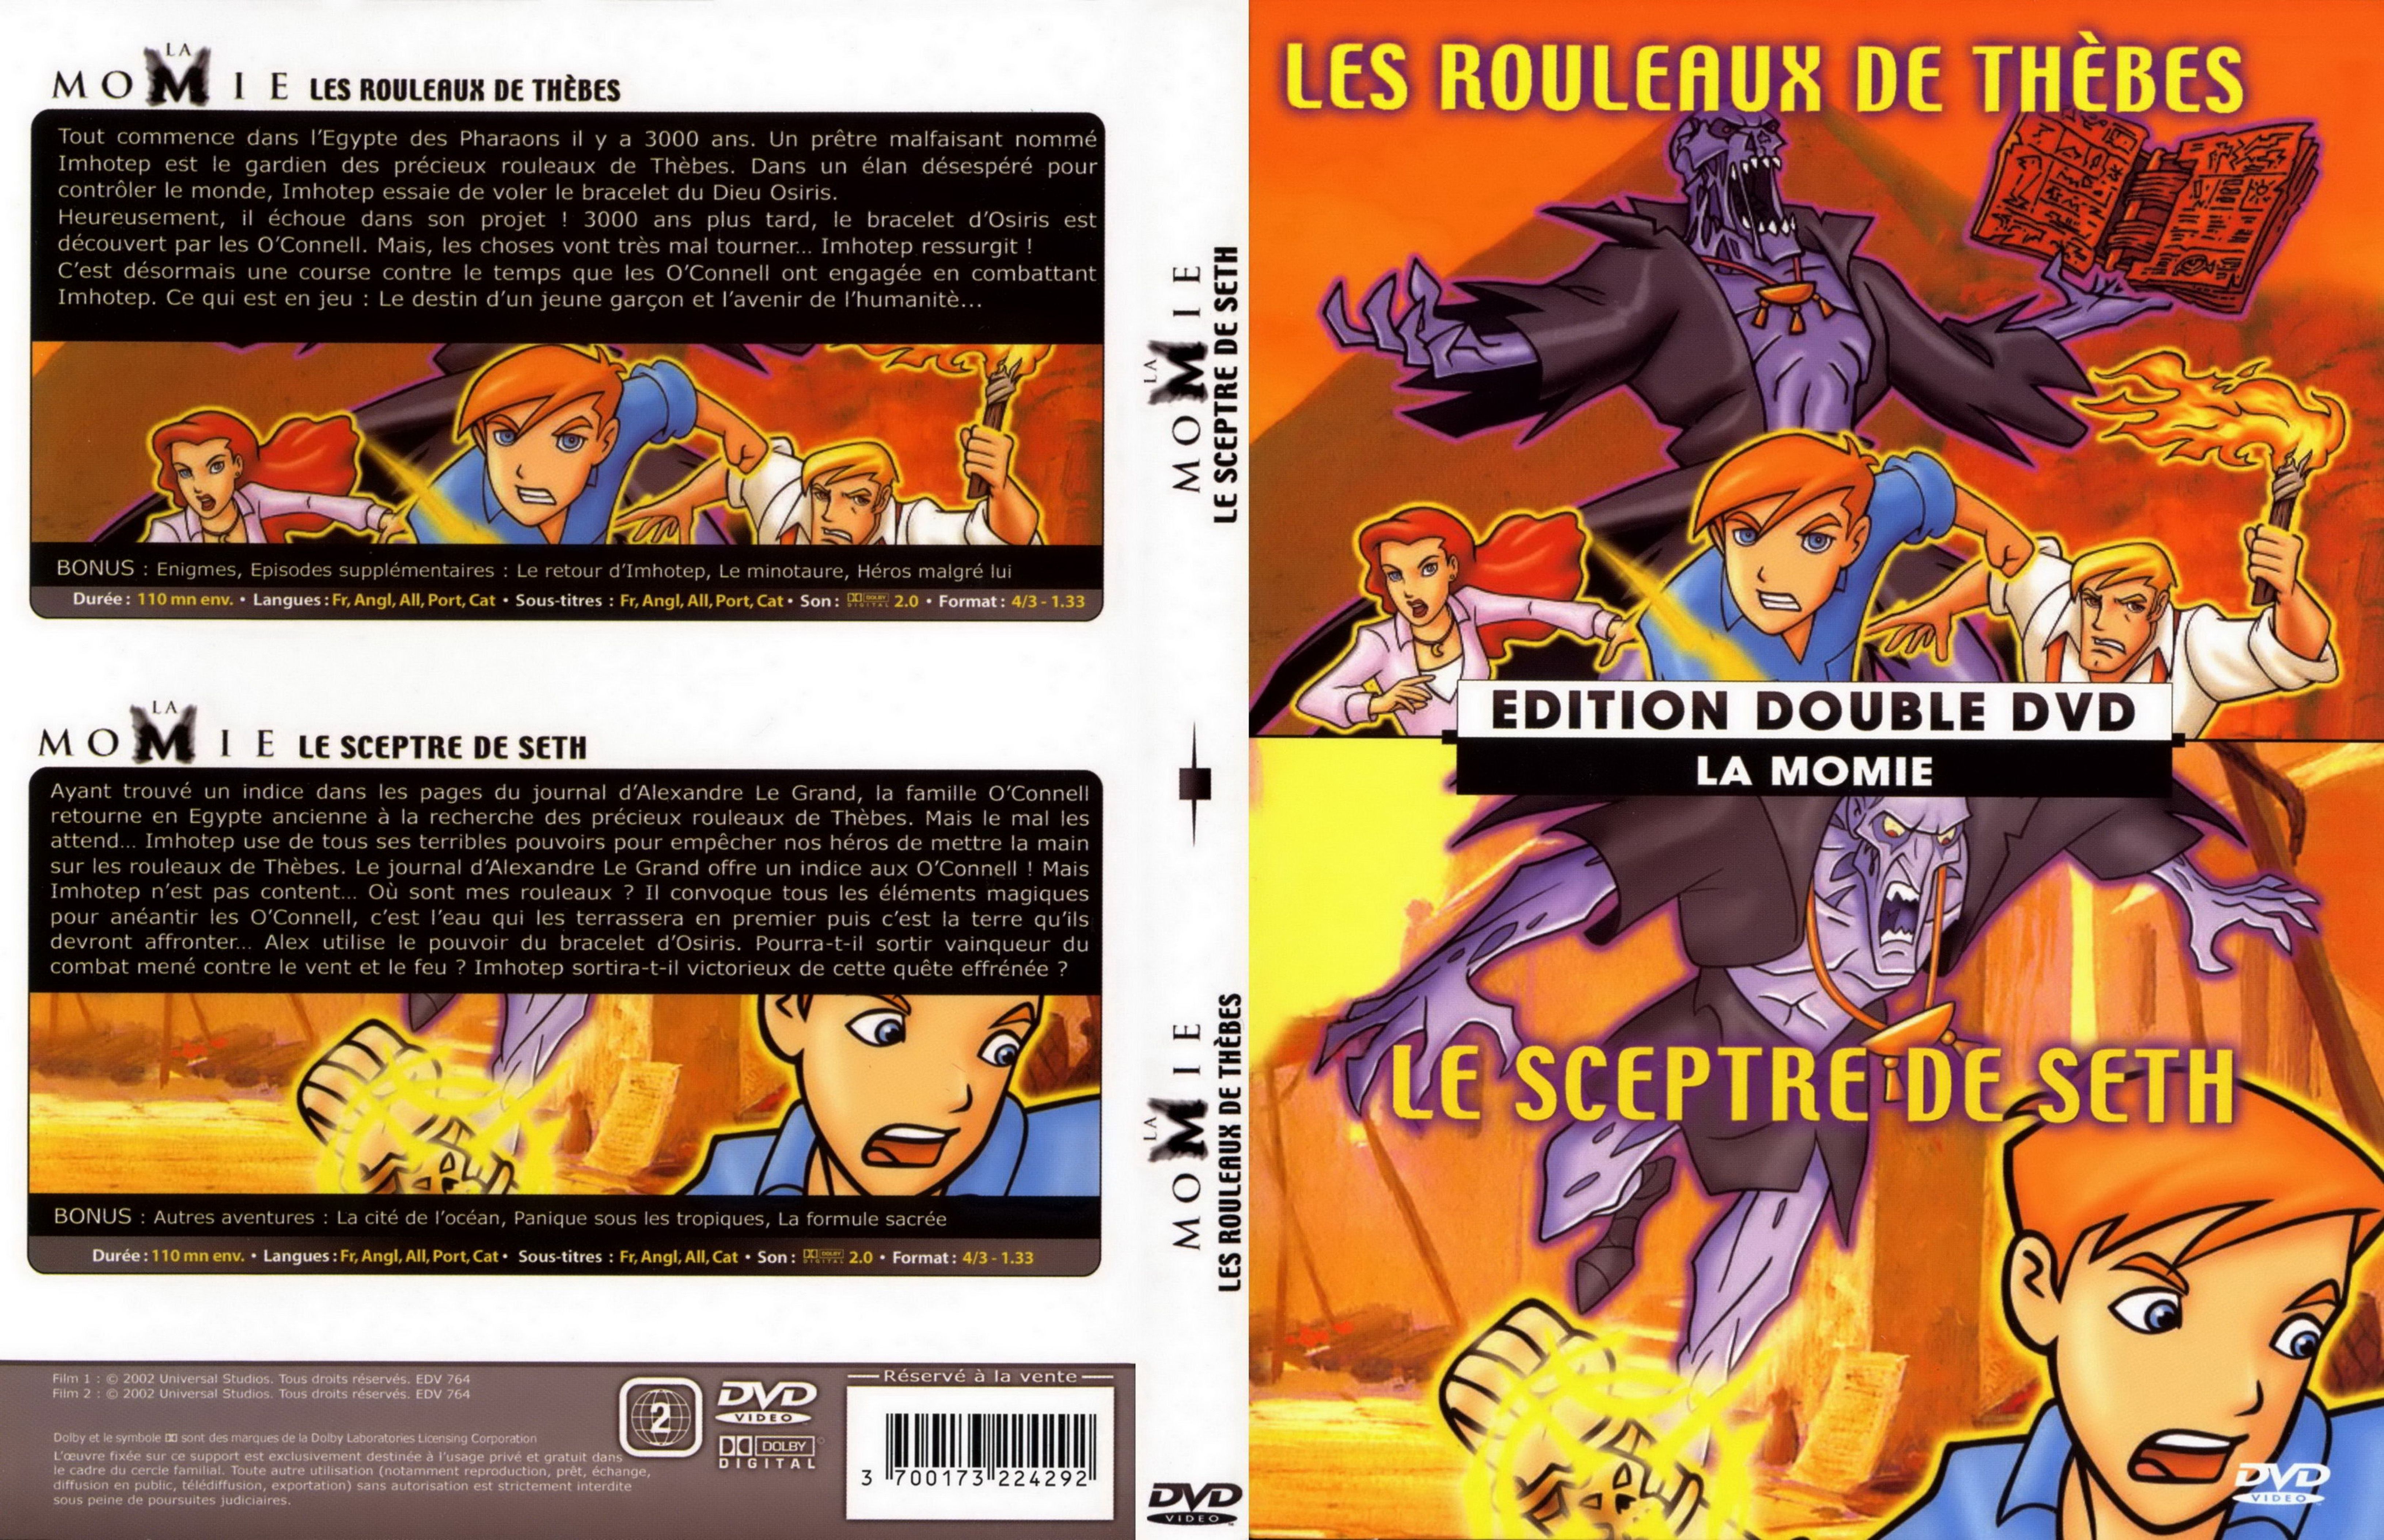 Jaquette DVD La momie (DA)